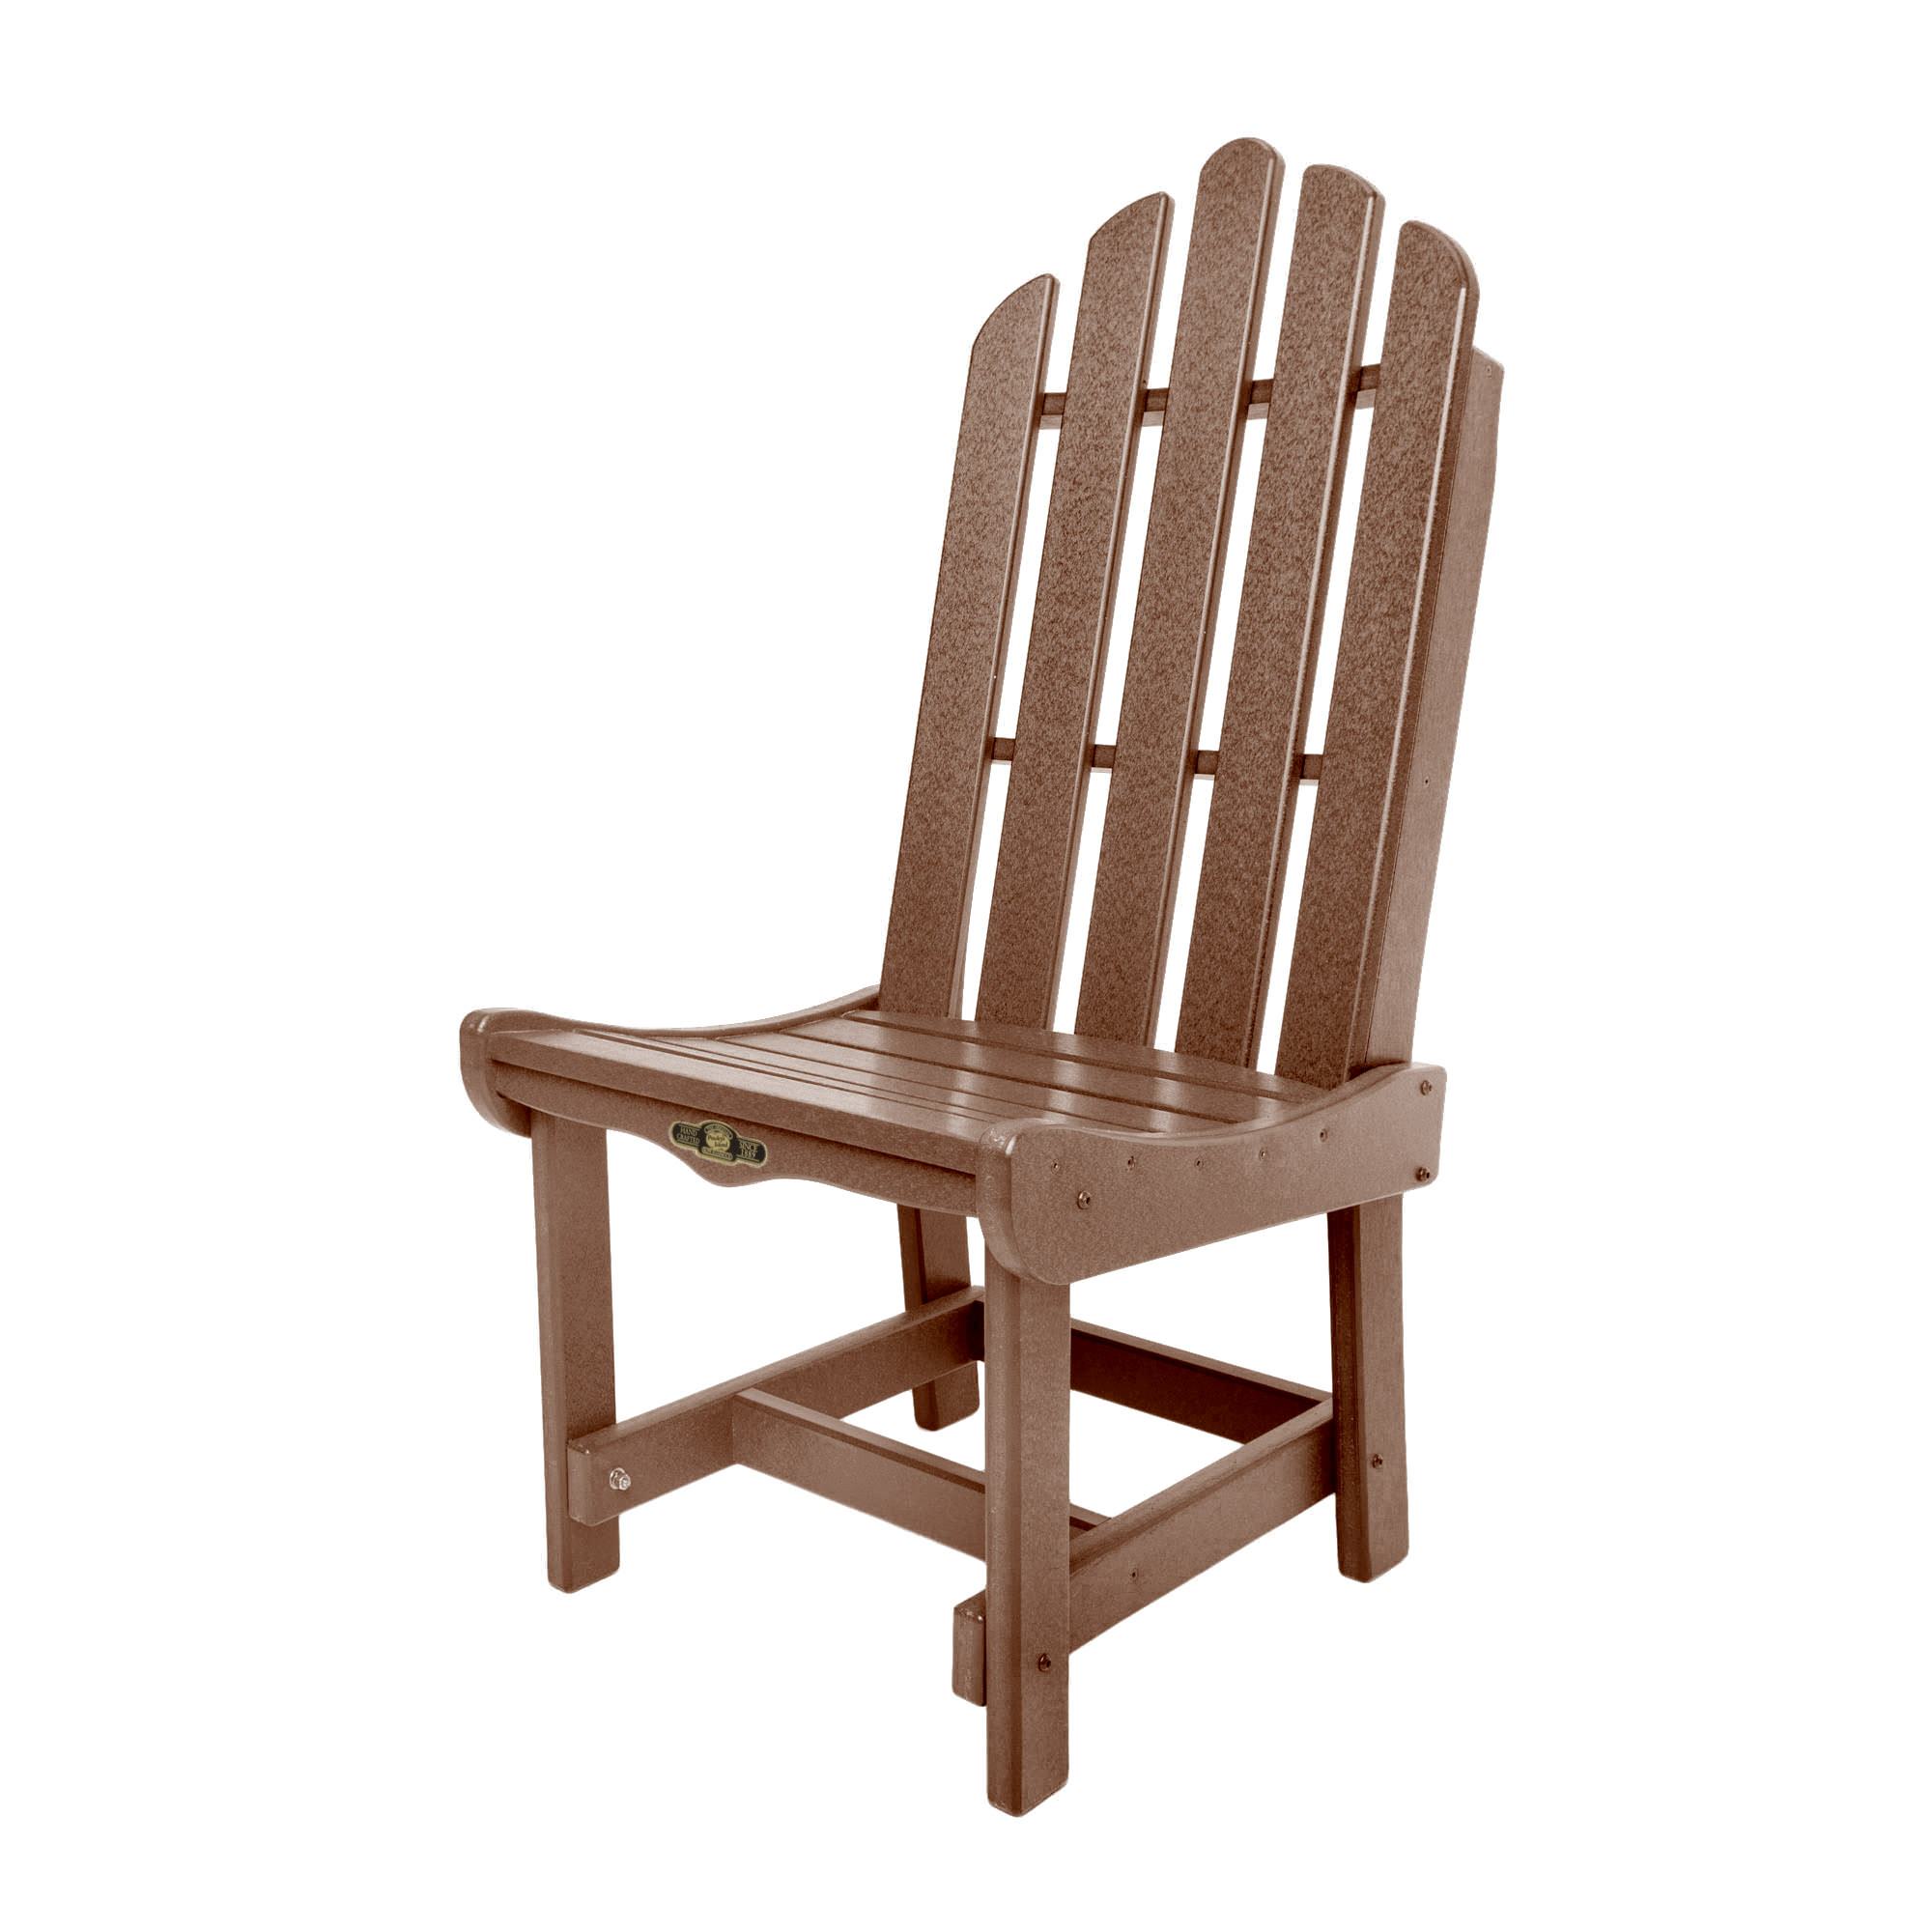 Original Pawleys Island Black & Cedar Durawood Sunrise Adirondack Rocking Chair Handcrafted in The Carolinas Stainless Steel Hardware Eco-Friendly Durawood Fit N Finish